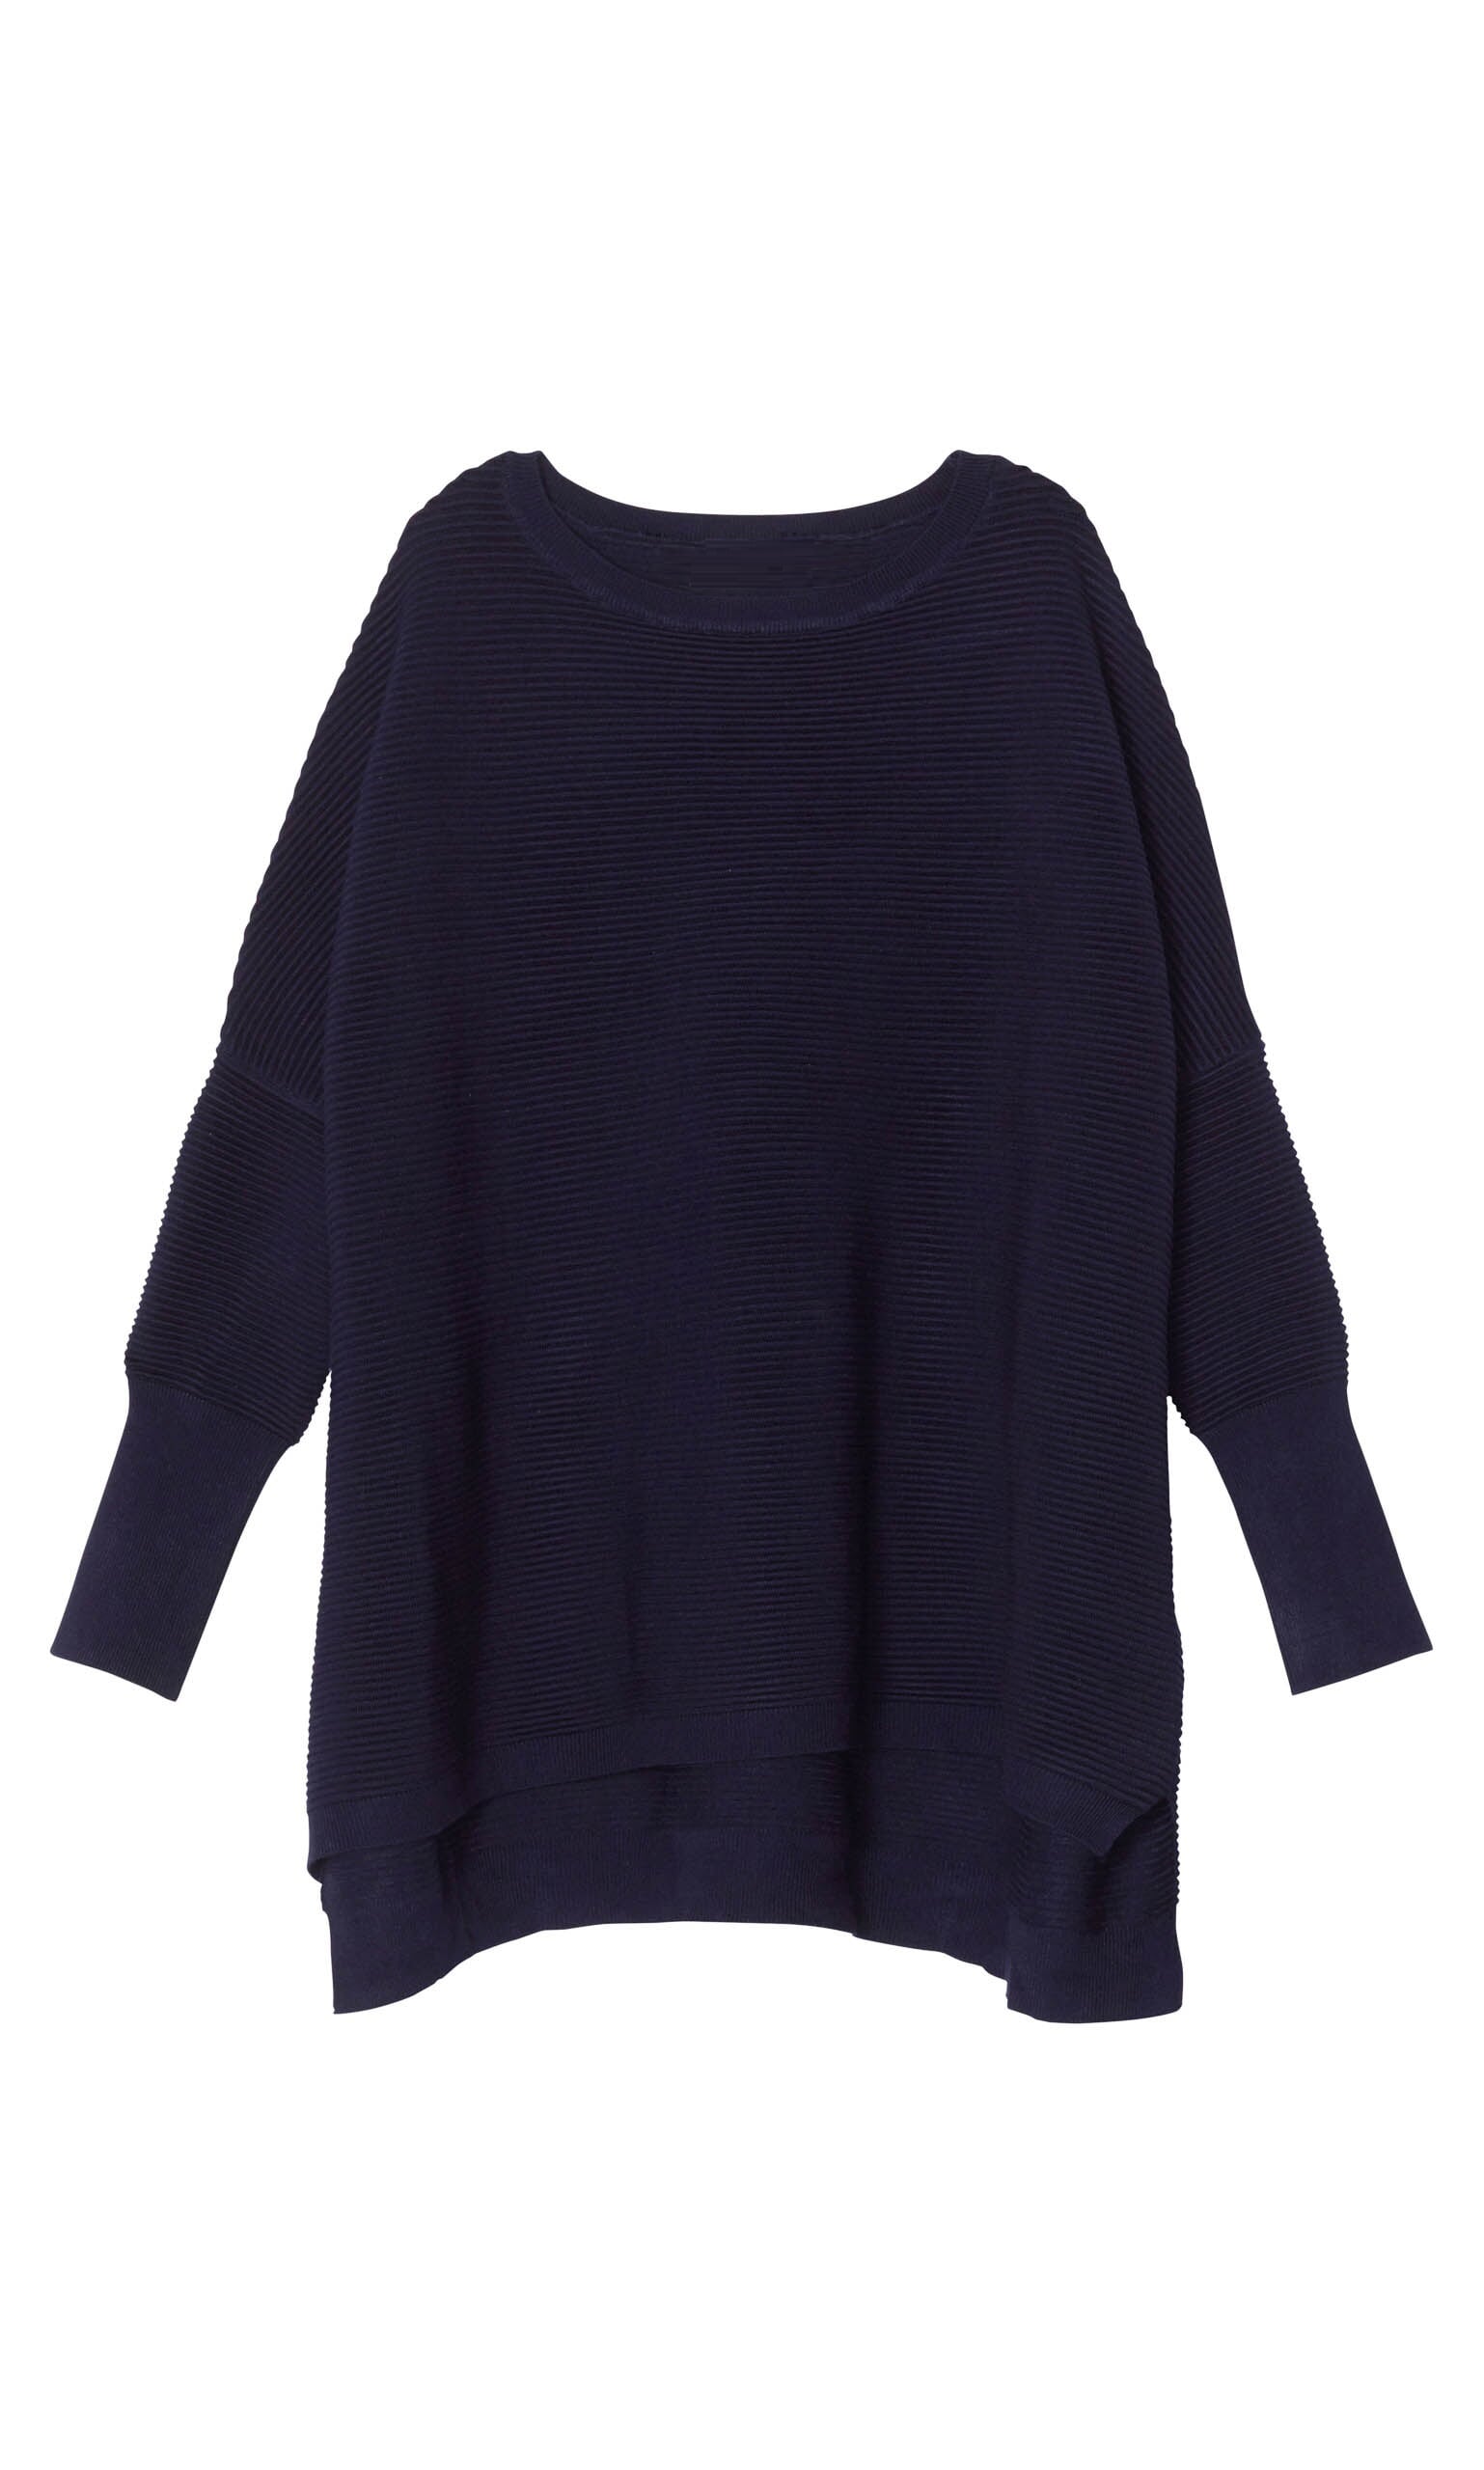 Fashion - Jack Sweater Collection - Plümo Ltd